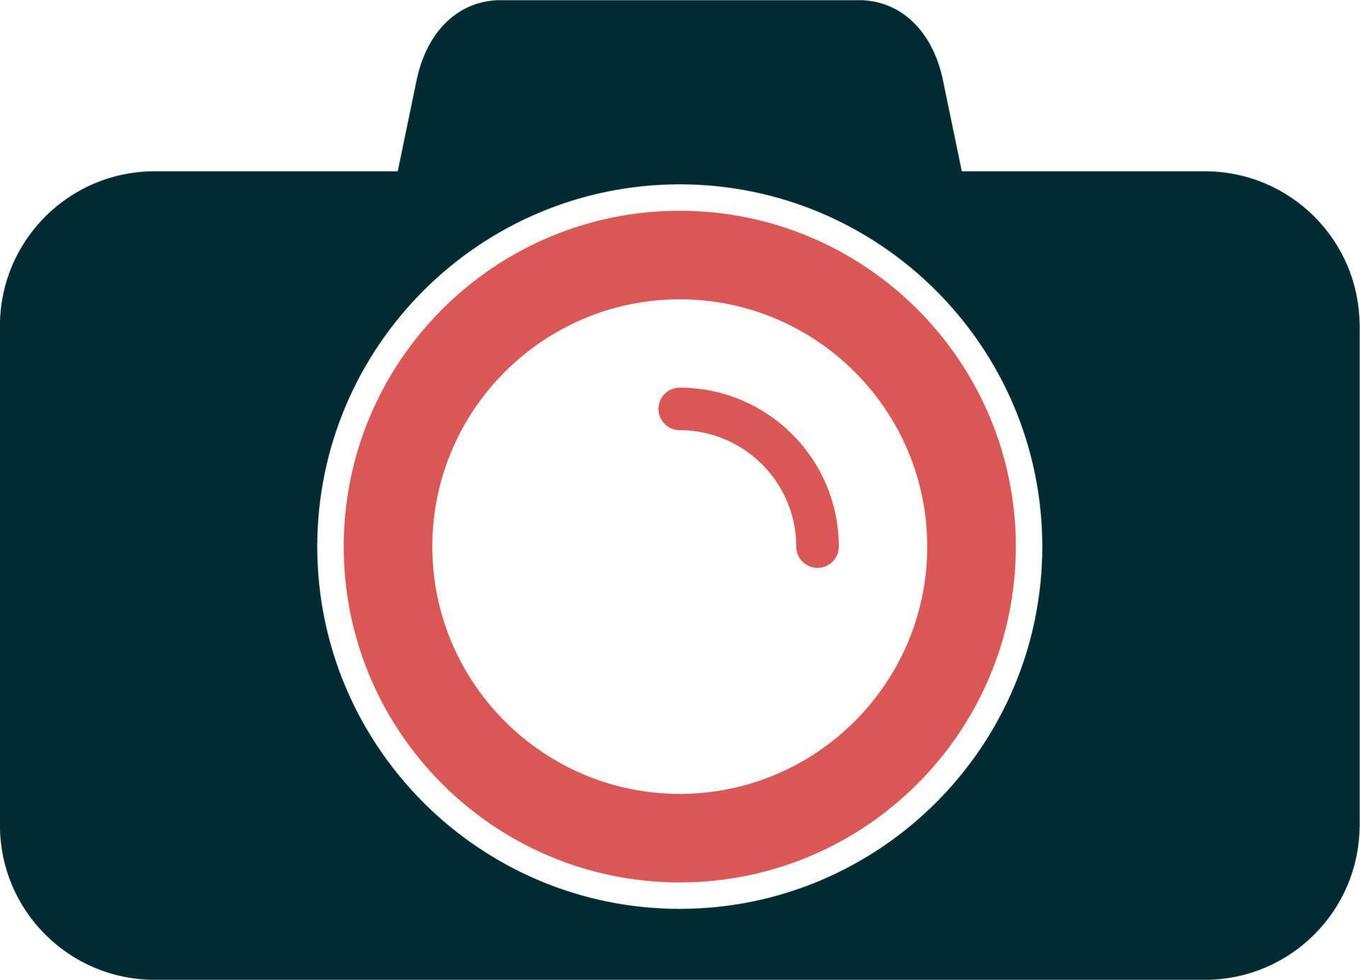 foto camera vector pictogram